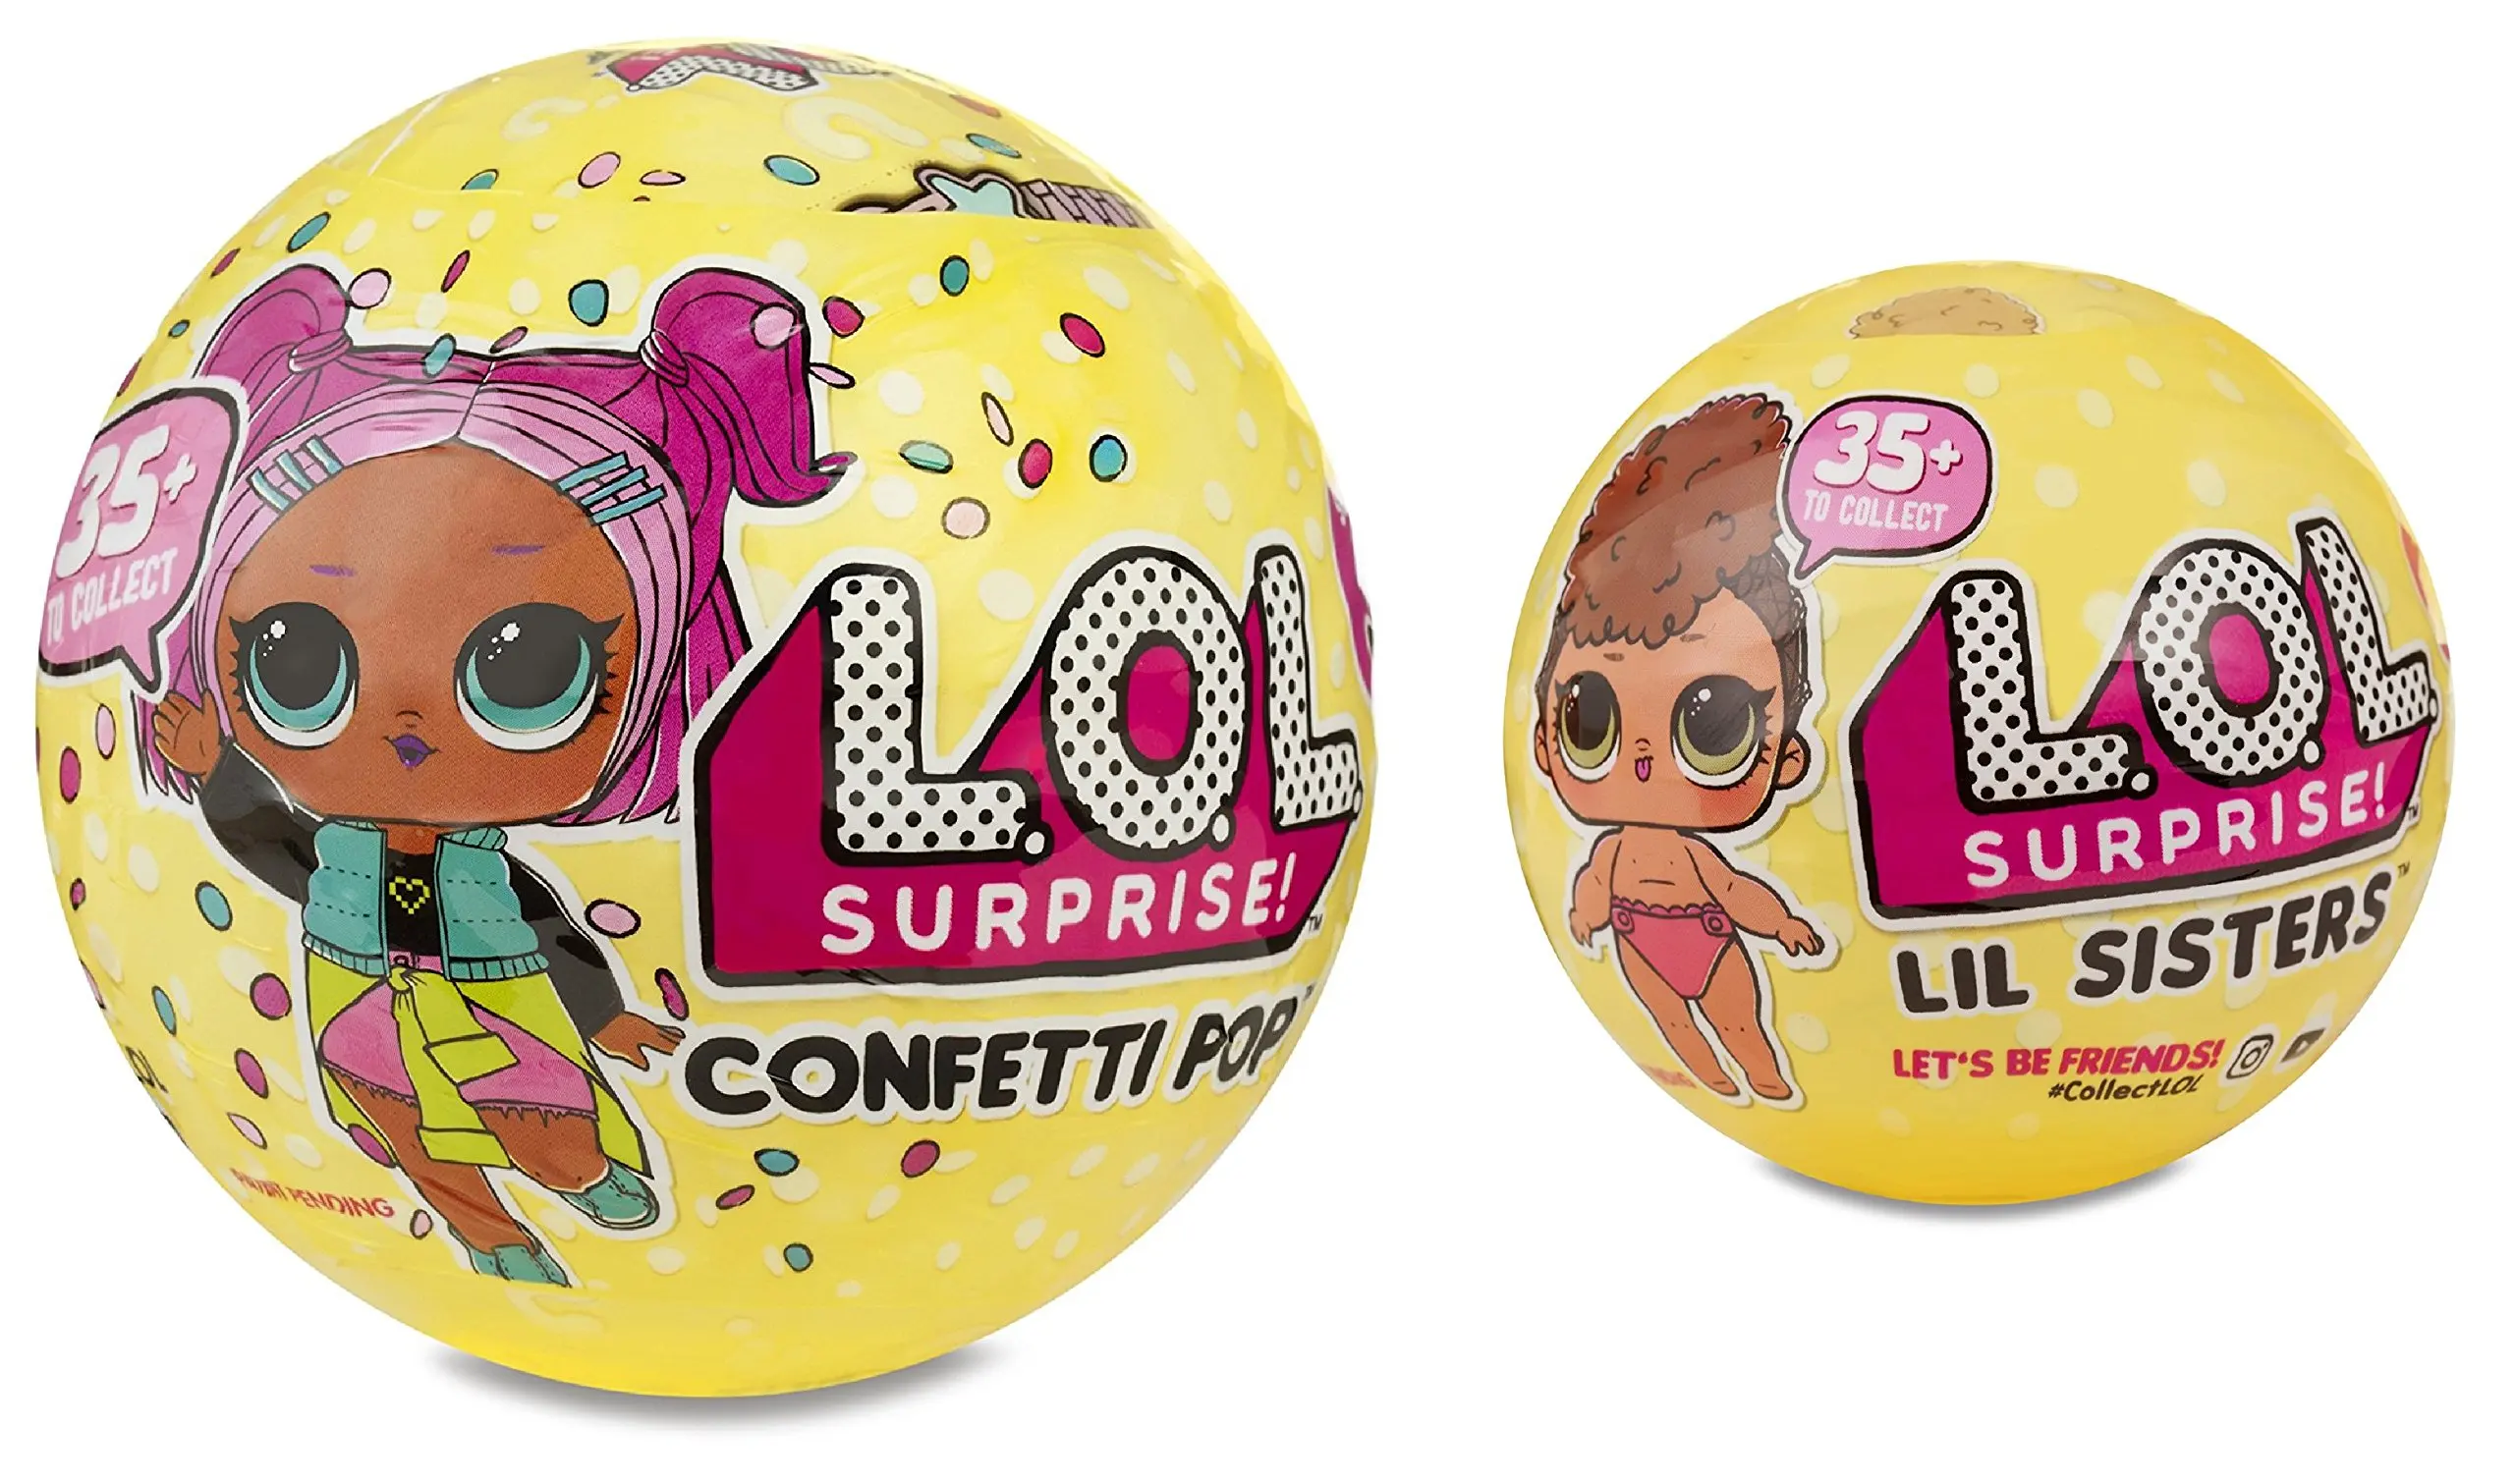 lol surprise confetti pop price